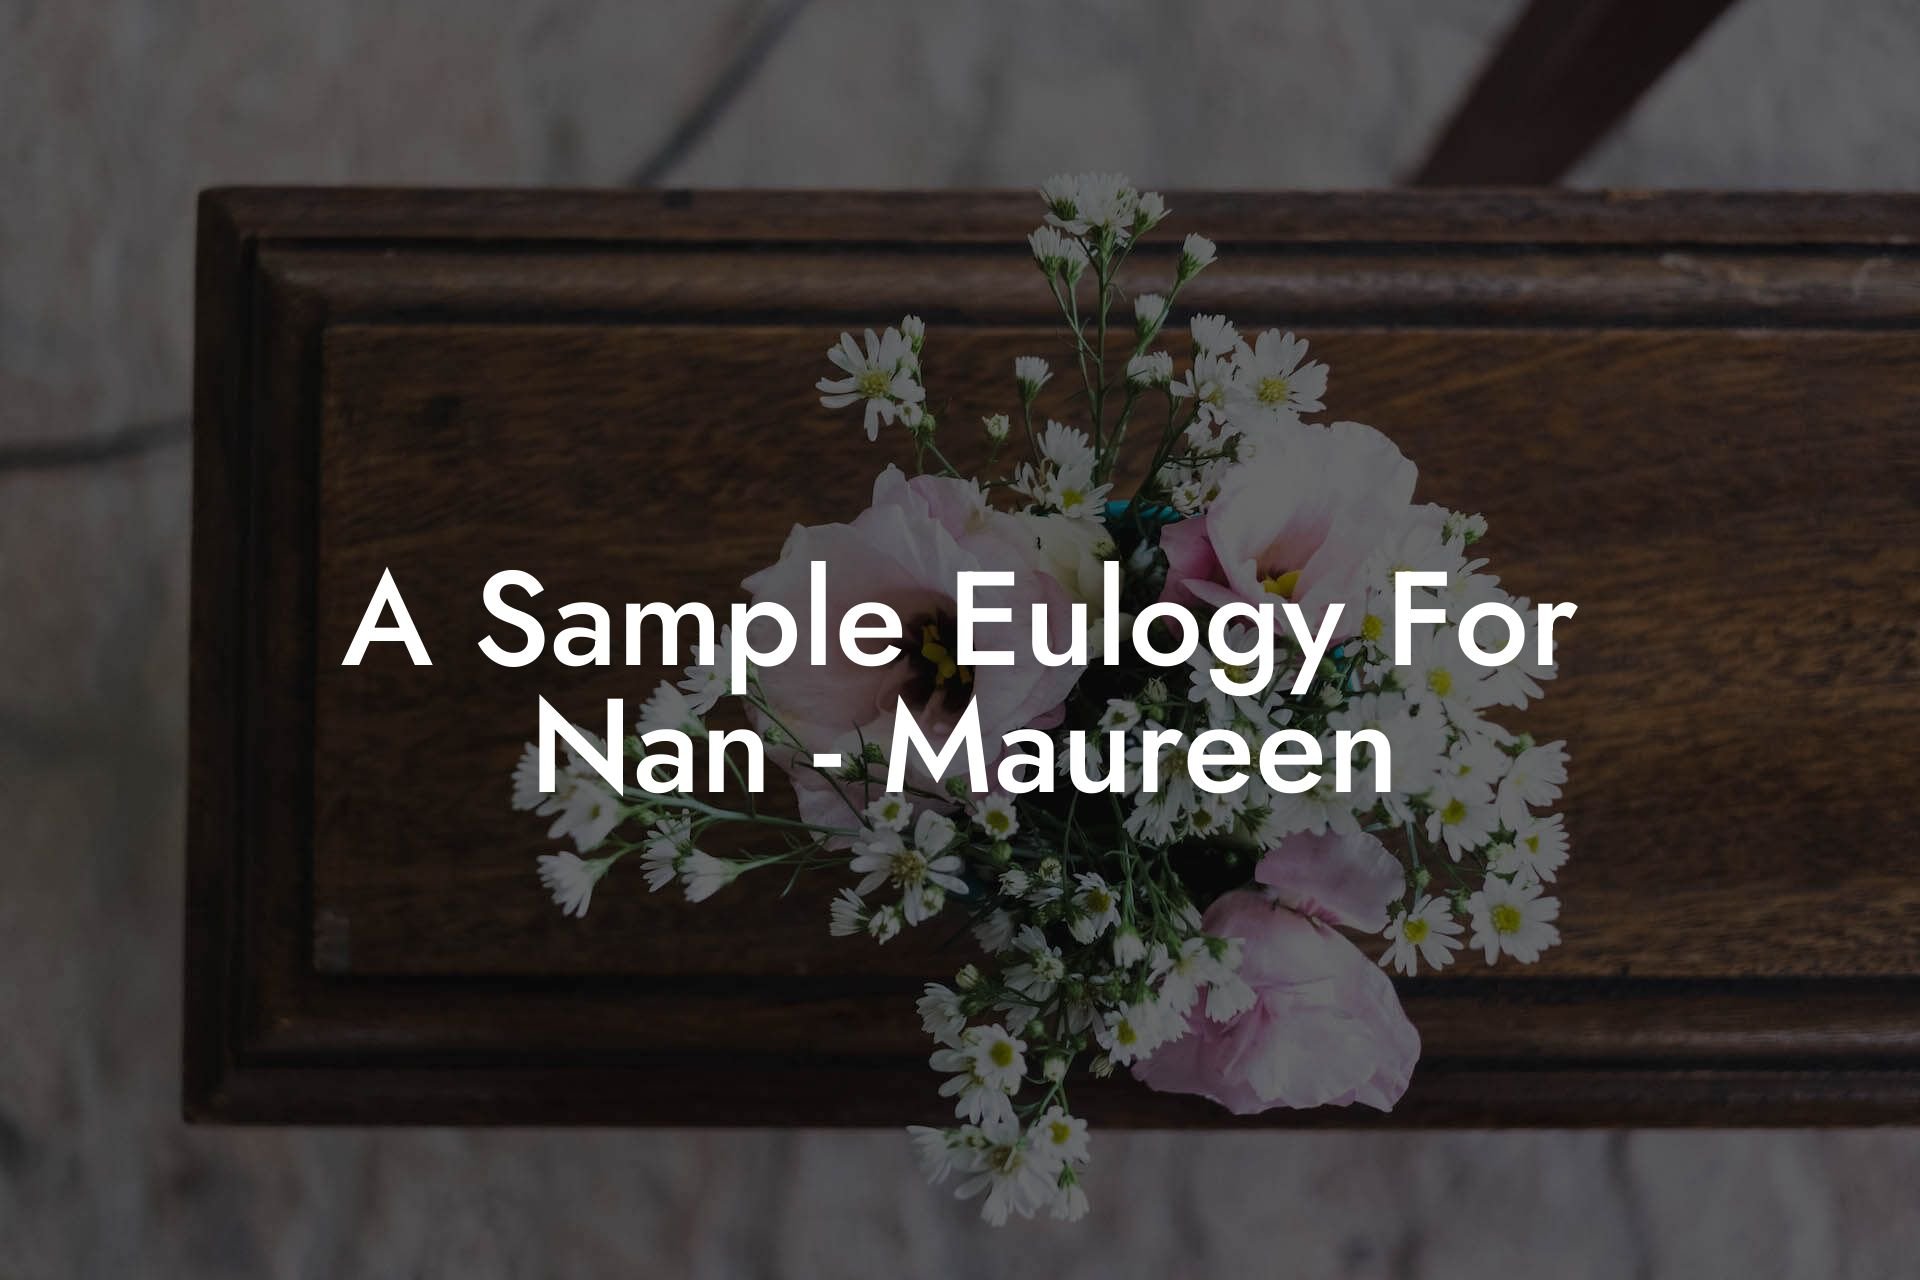 A Sample Eulogy For Nan - Maureen